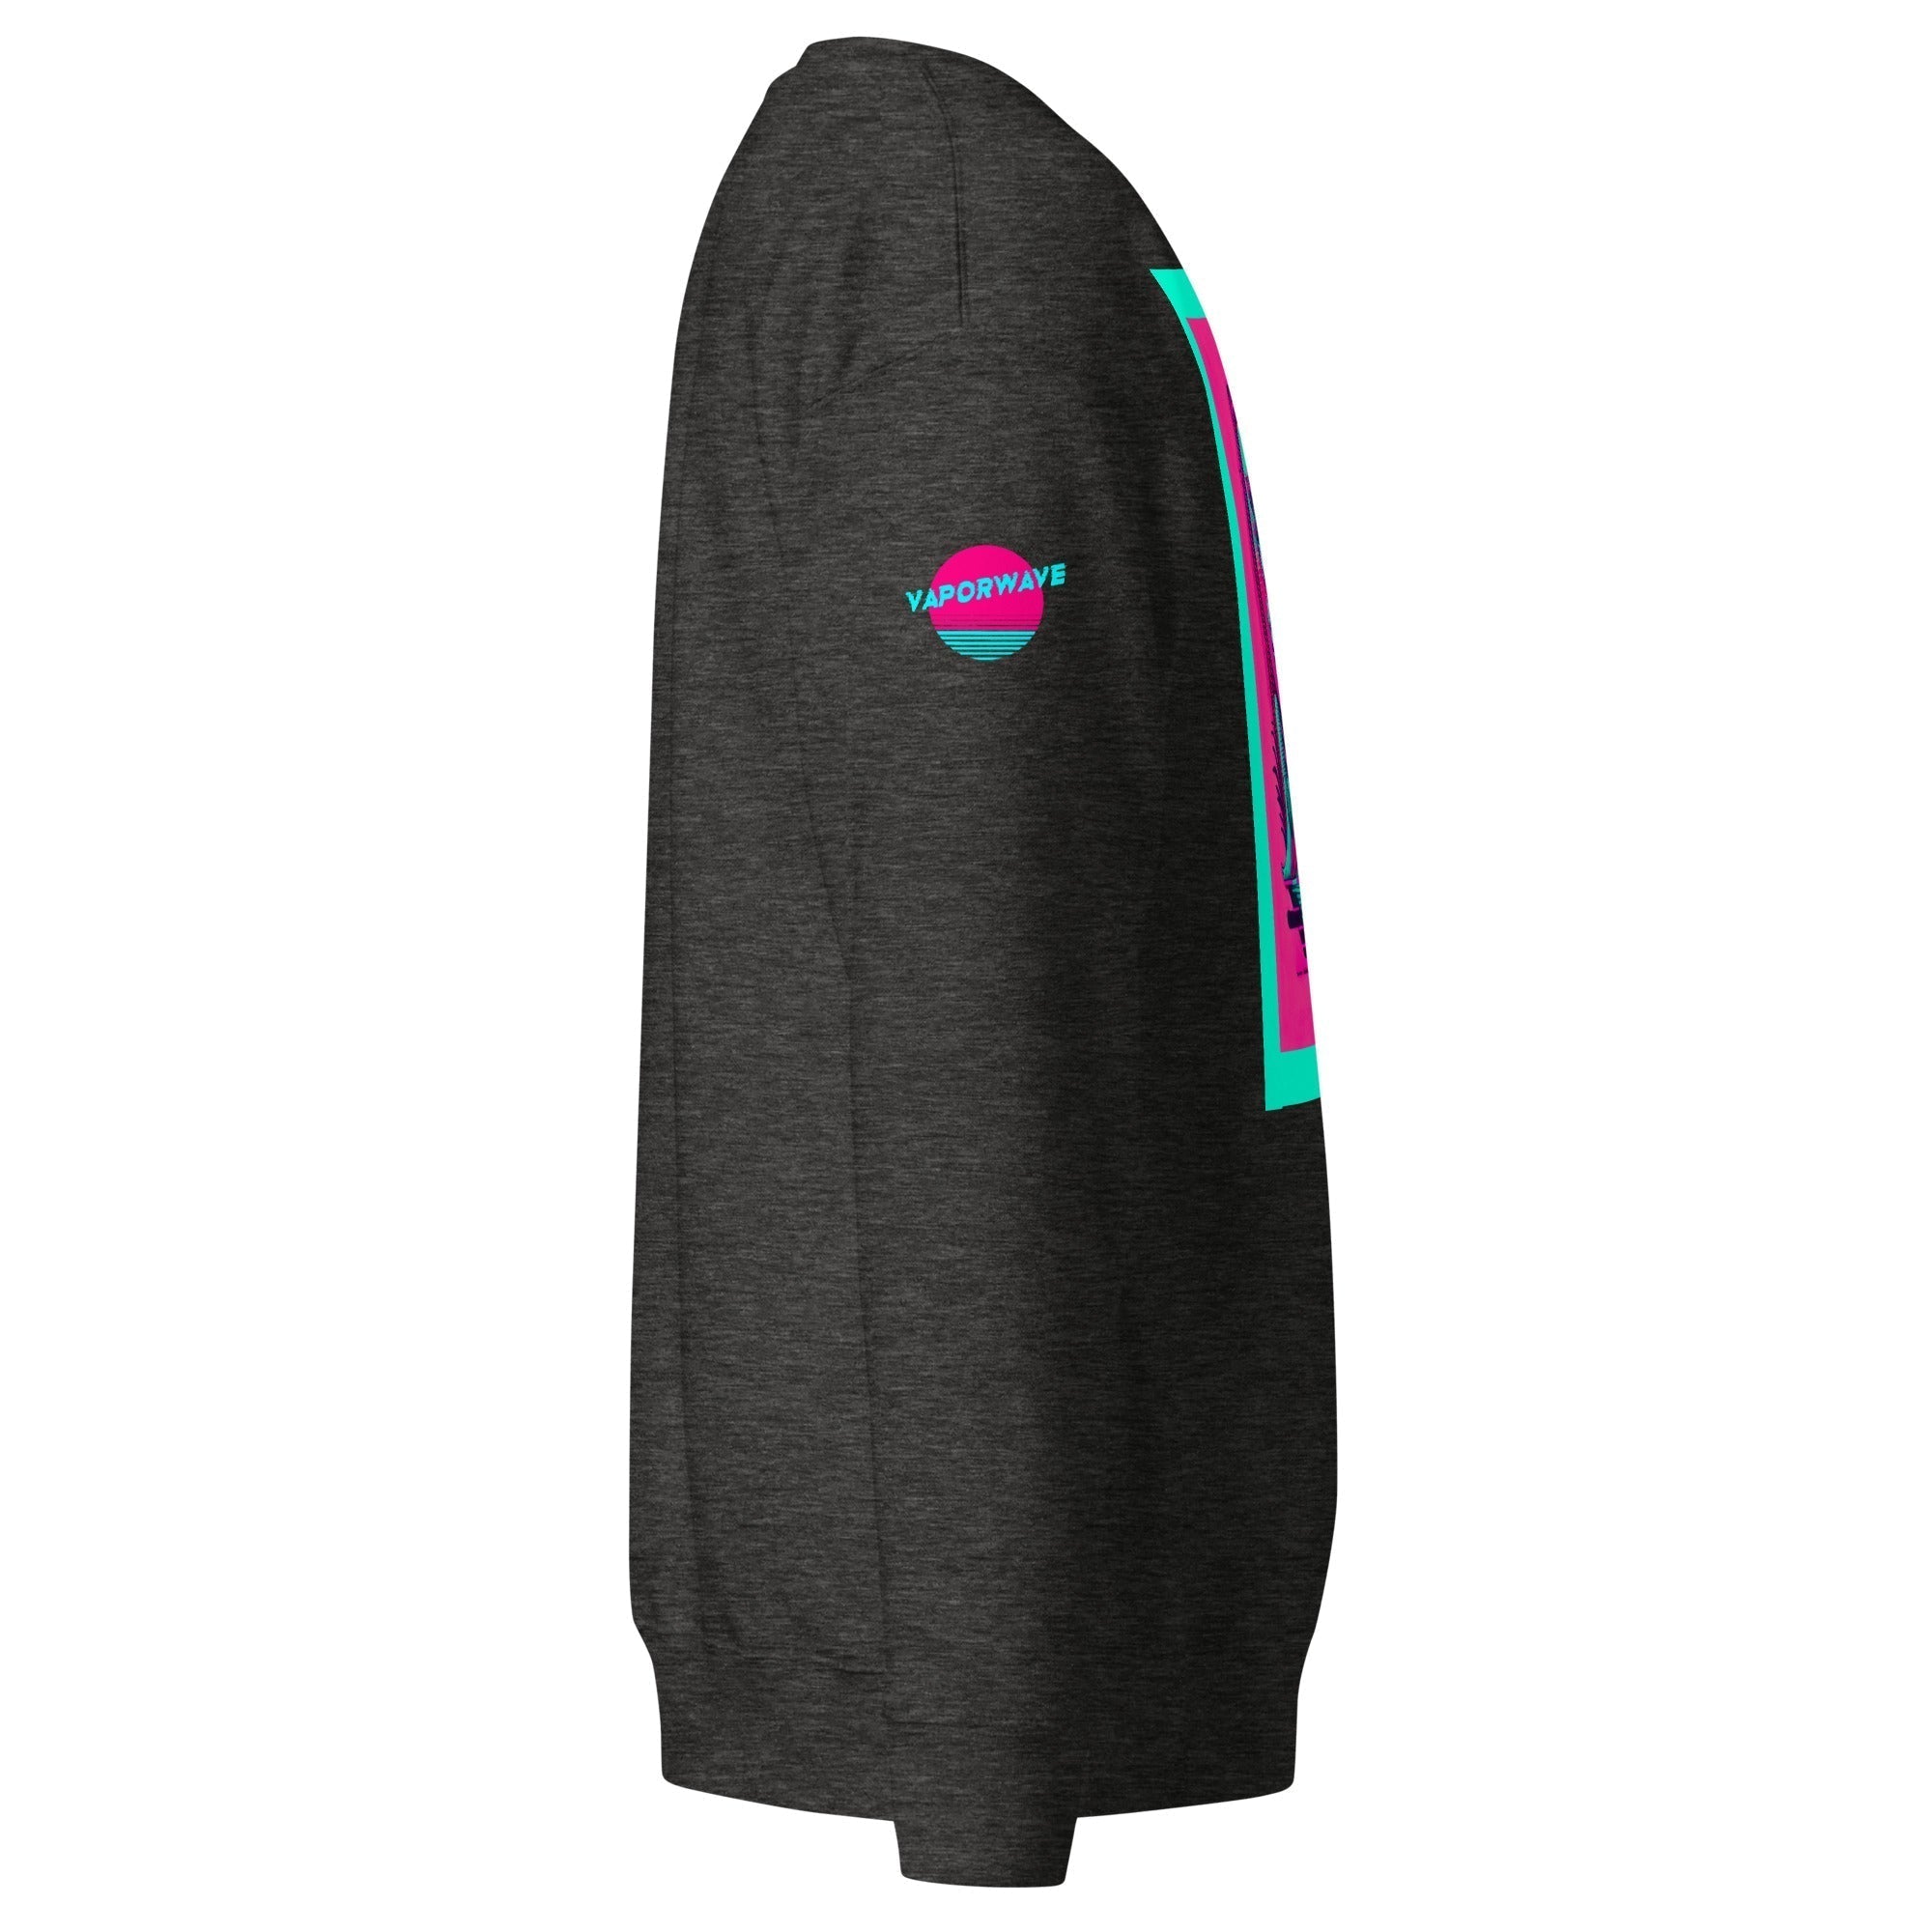 Unisex Premium Sweatshirt - Vaporwave Series v.31 - GRAPHIC T-SHIRTS